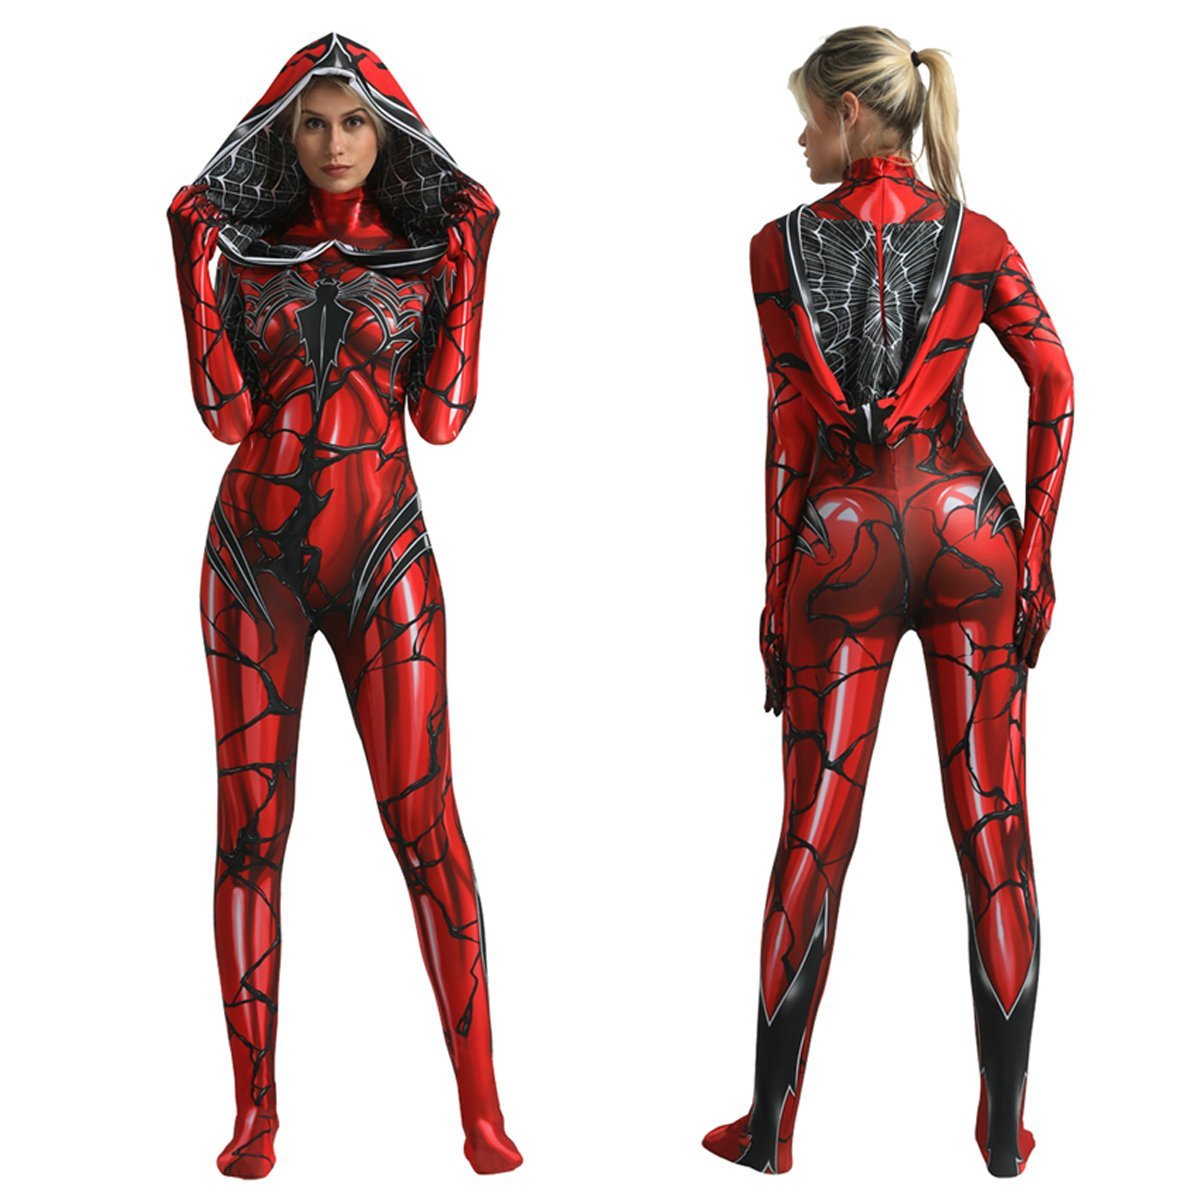 Spiderman jumpsuits onesies Woman Halloween Costume Bodysuit Spandex Zentai Catsuit Cosplay